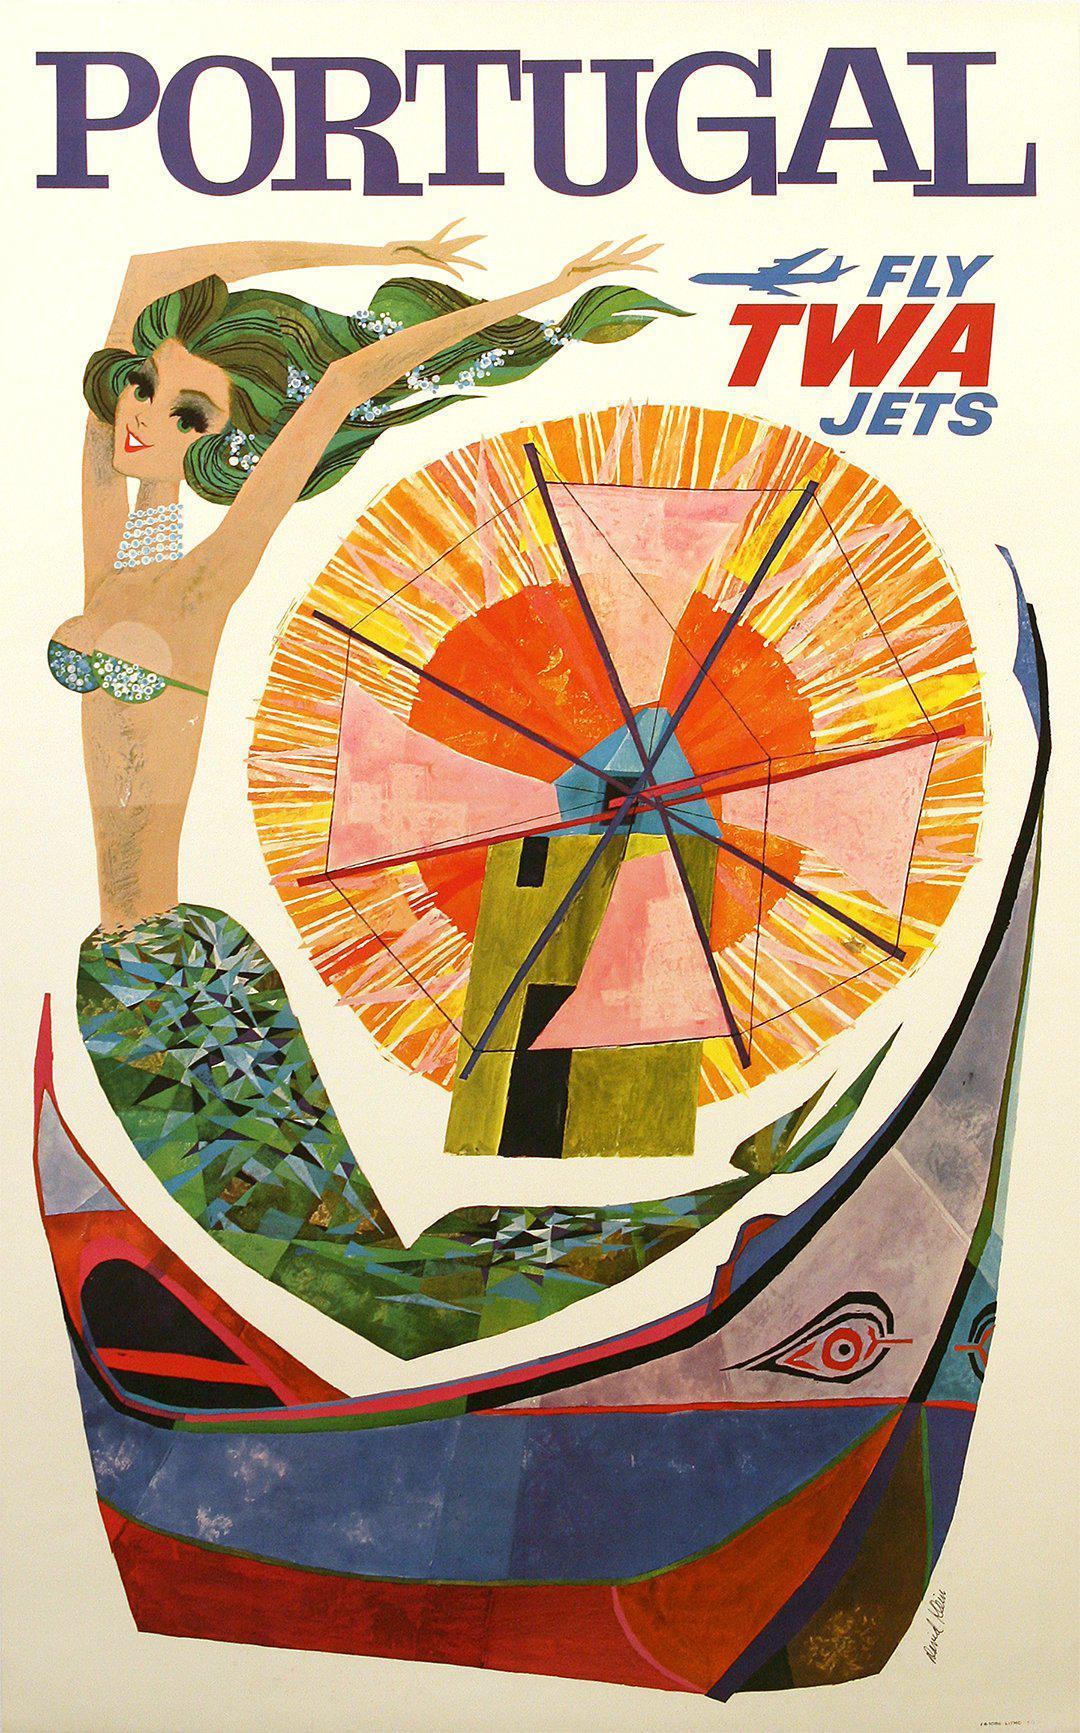 Original Vintage Fly TWA Jets Portugal Poster by David Klein c1960